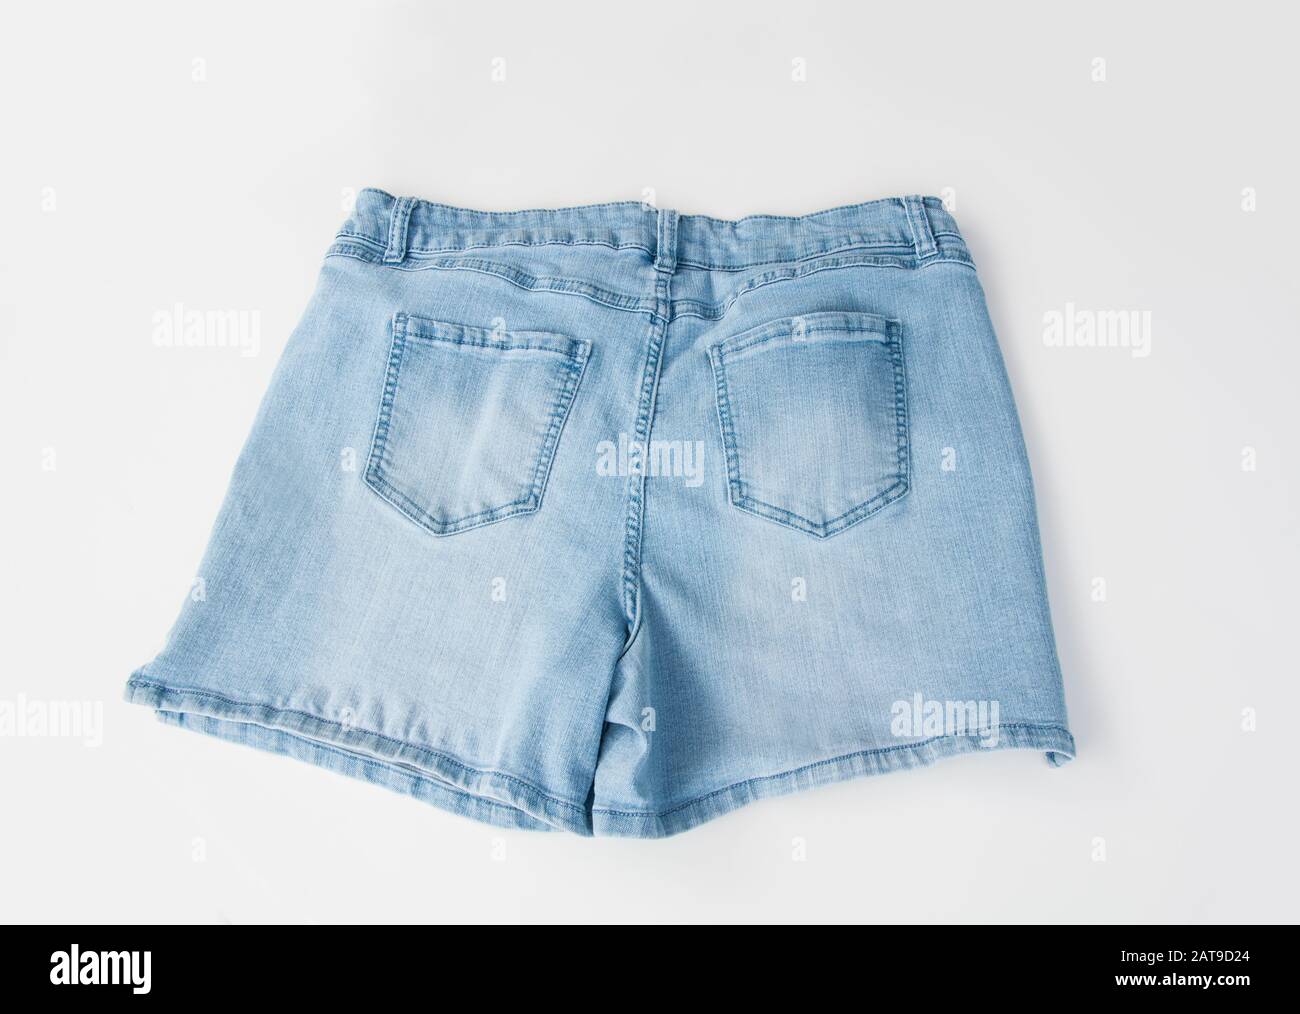 Pantalones de jeans imágenes de alta - Alamy